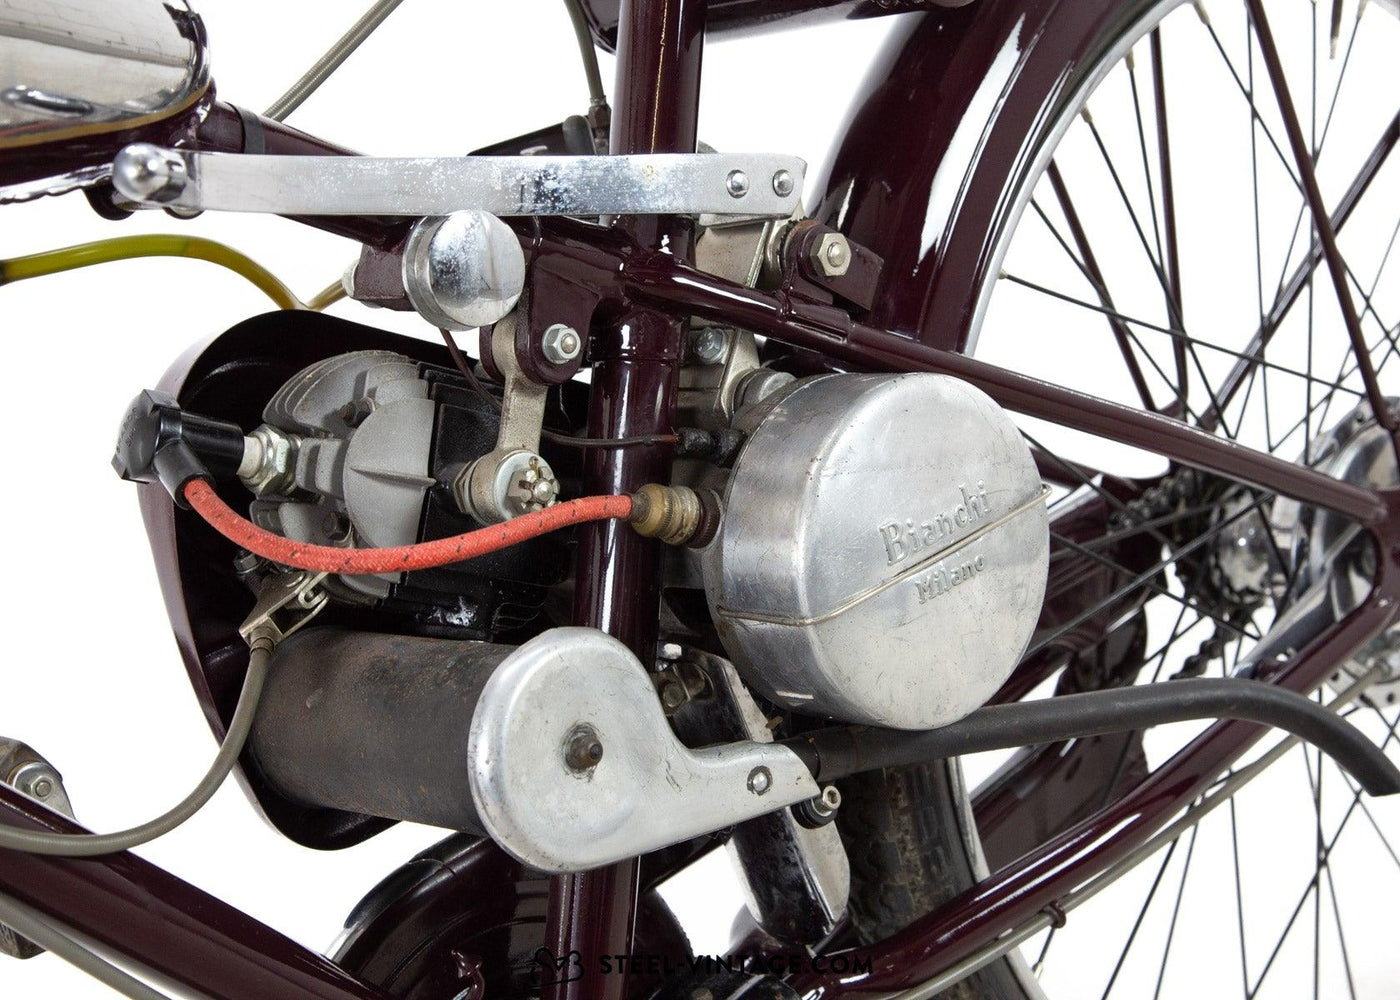 Bianchi Aquilotto Motor Bicycle 1953 - Steel Vintage Bikes